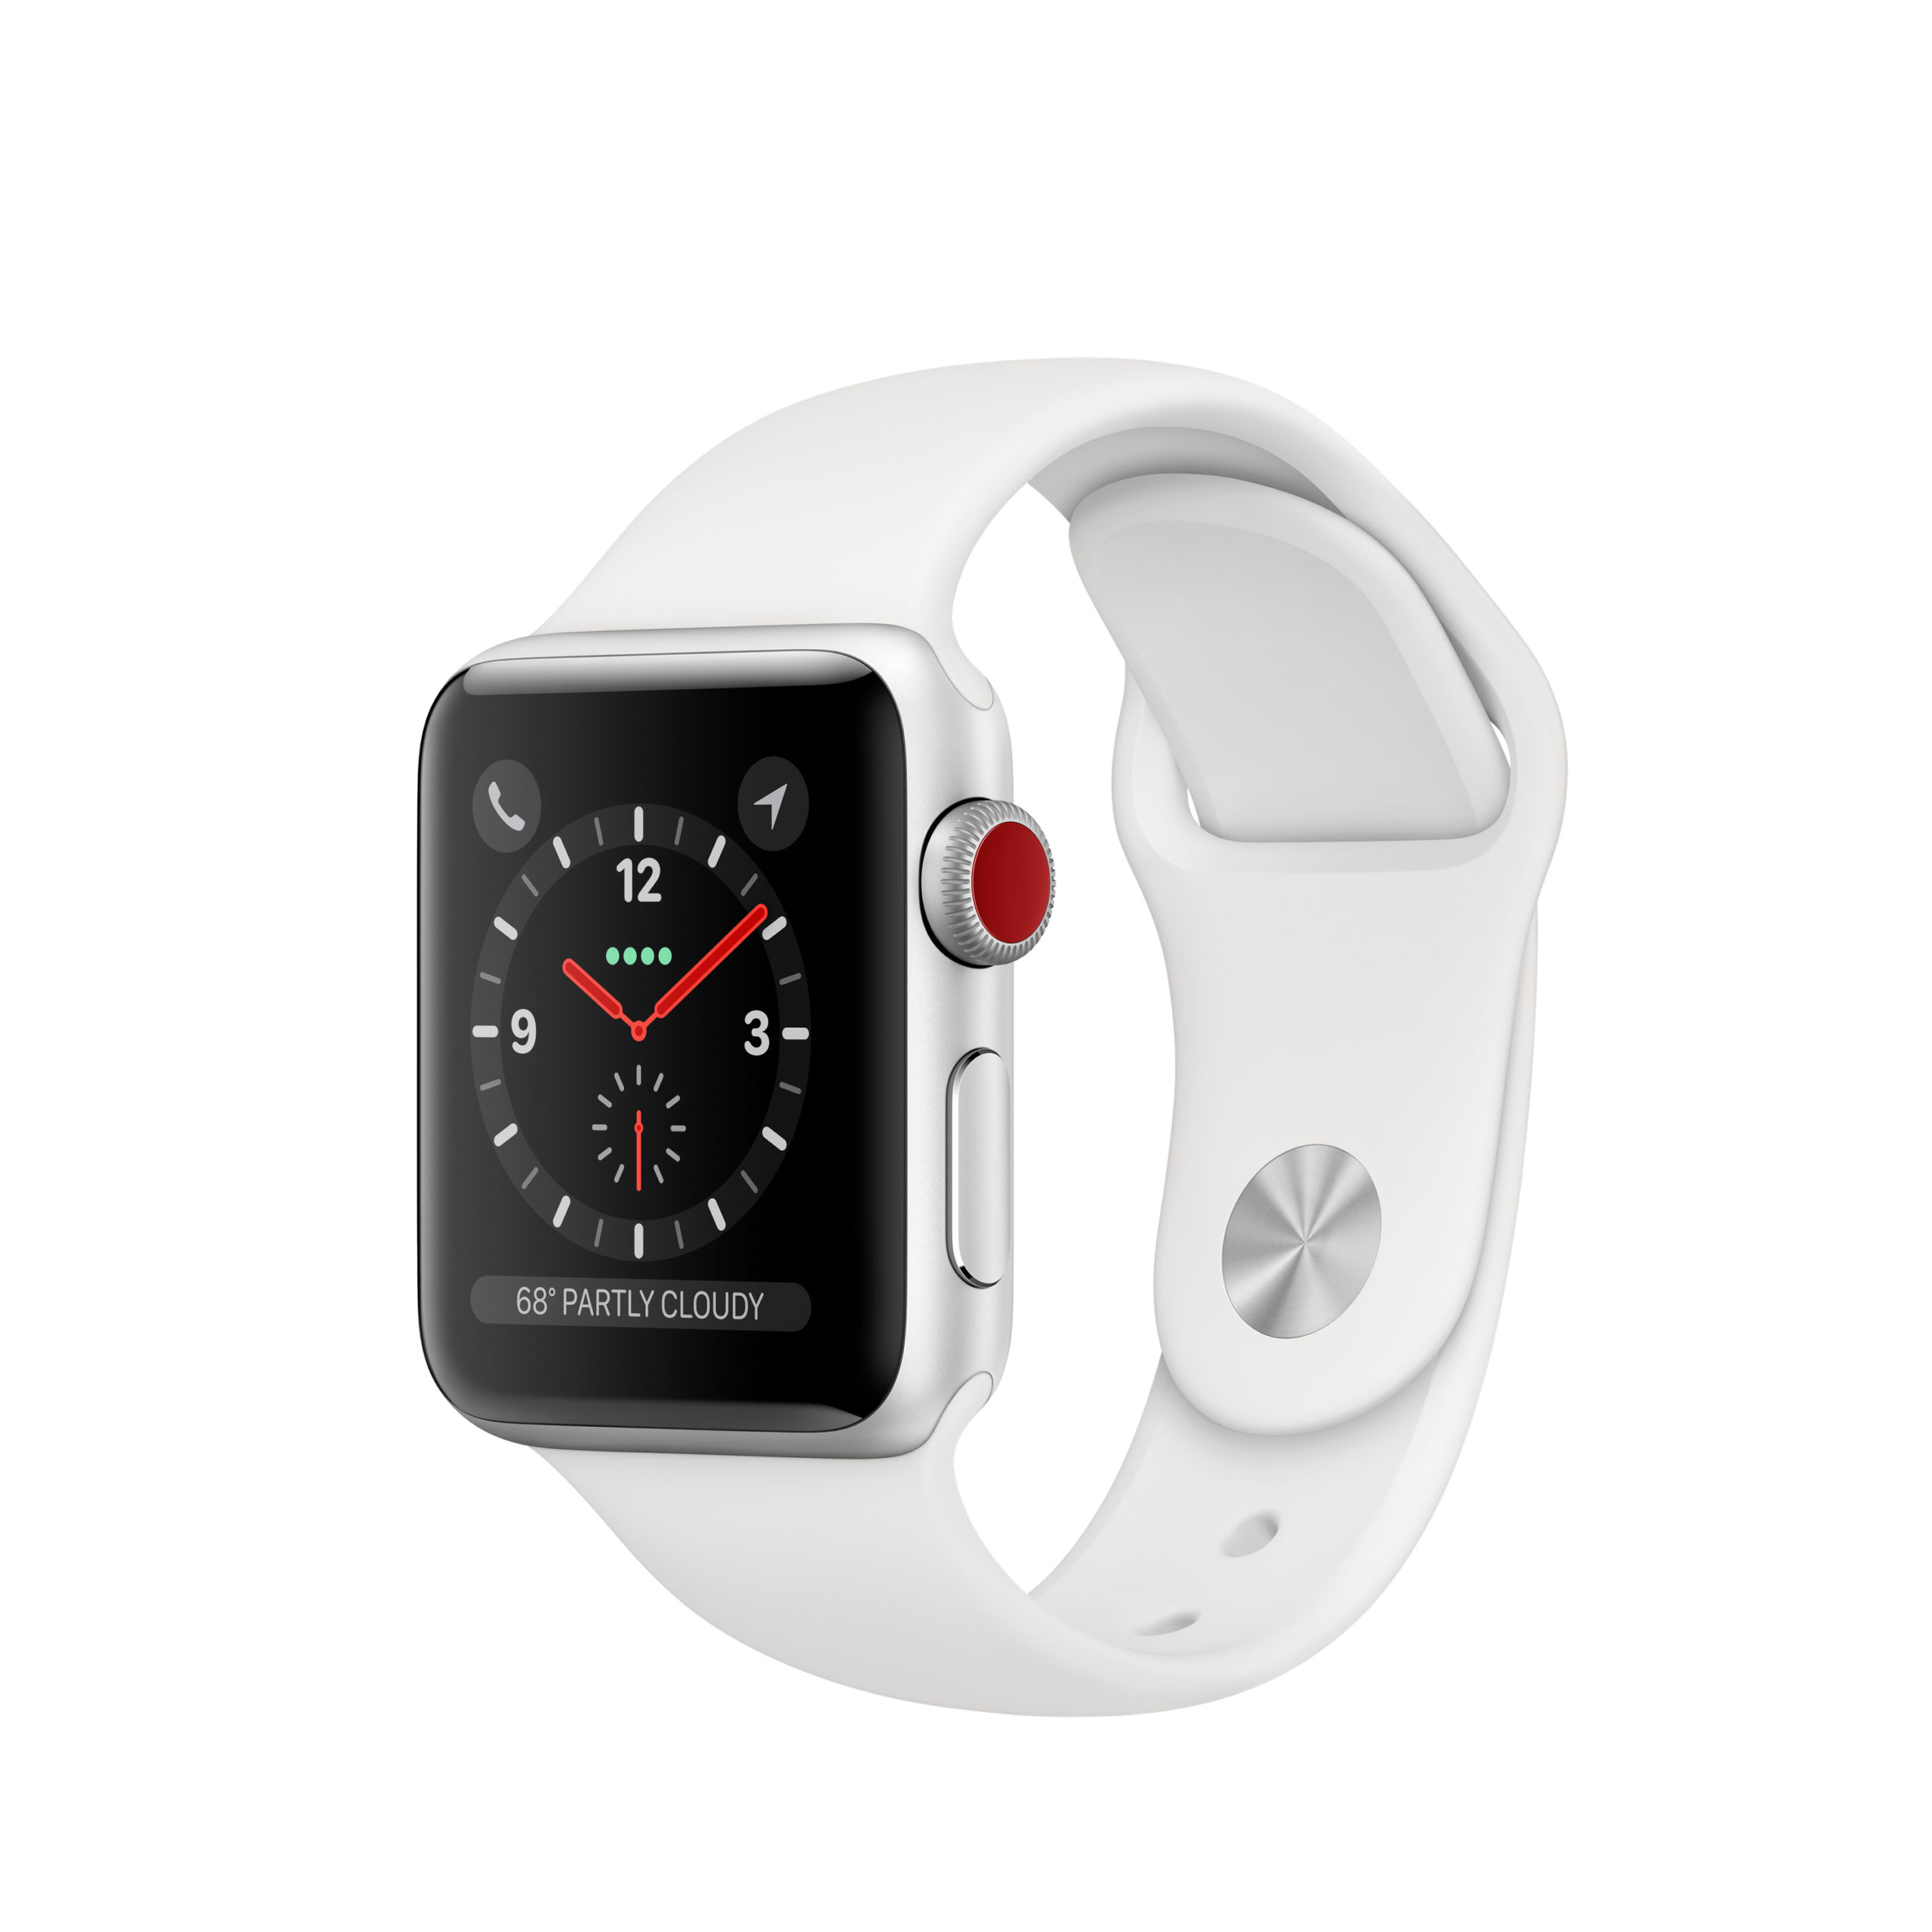 MTGG2LL/A - $273 - Apple Watch Series 3 (GPS + Cellular, 38mm) - Silver